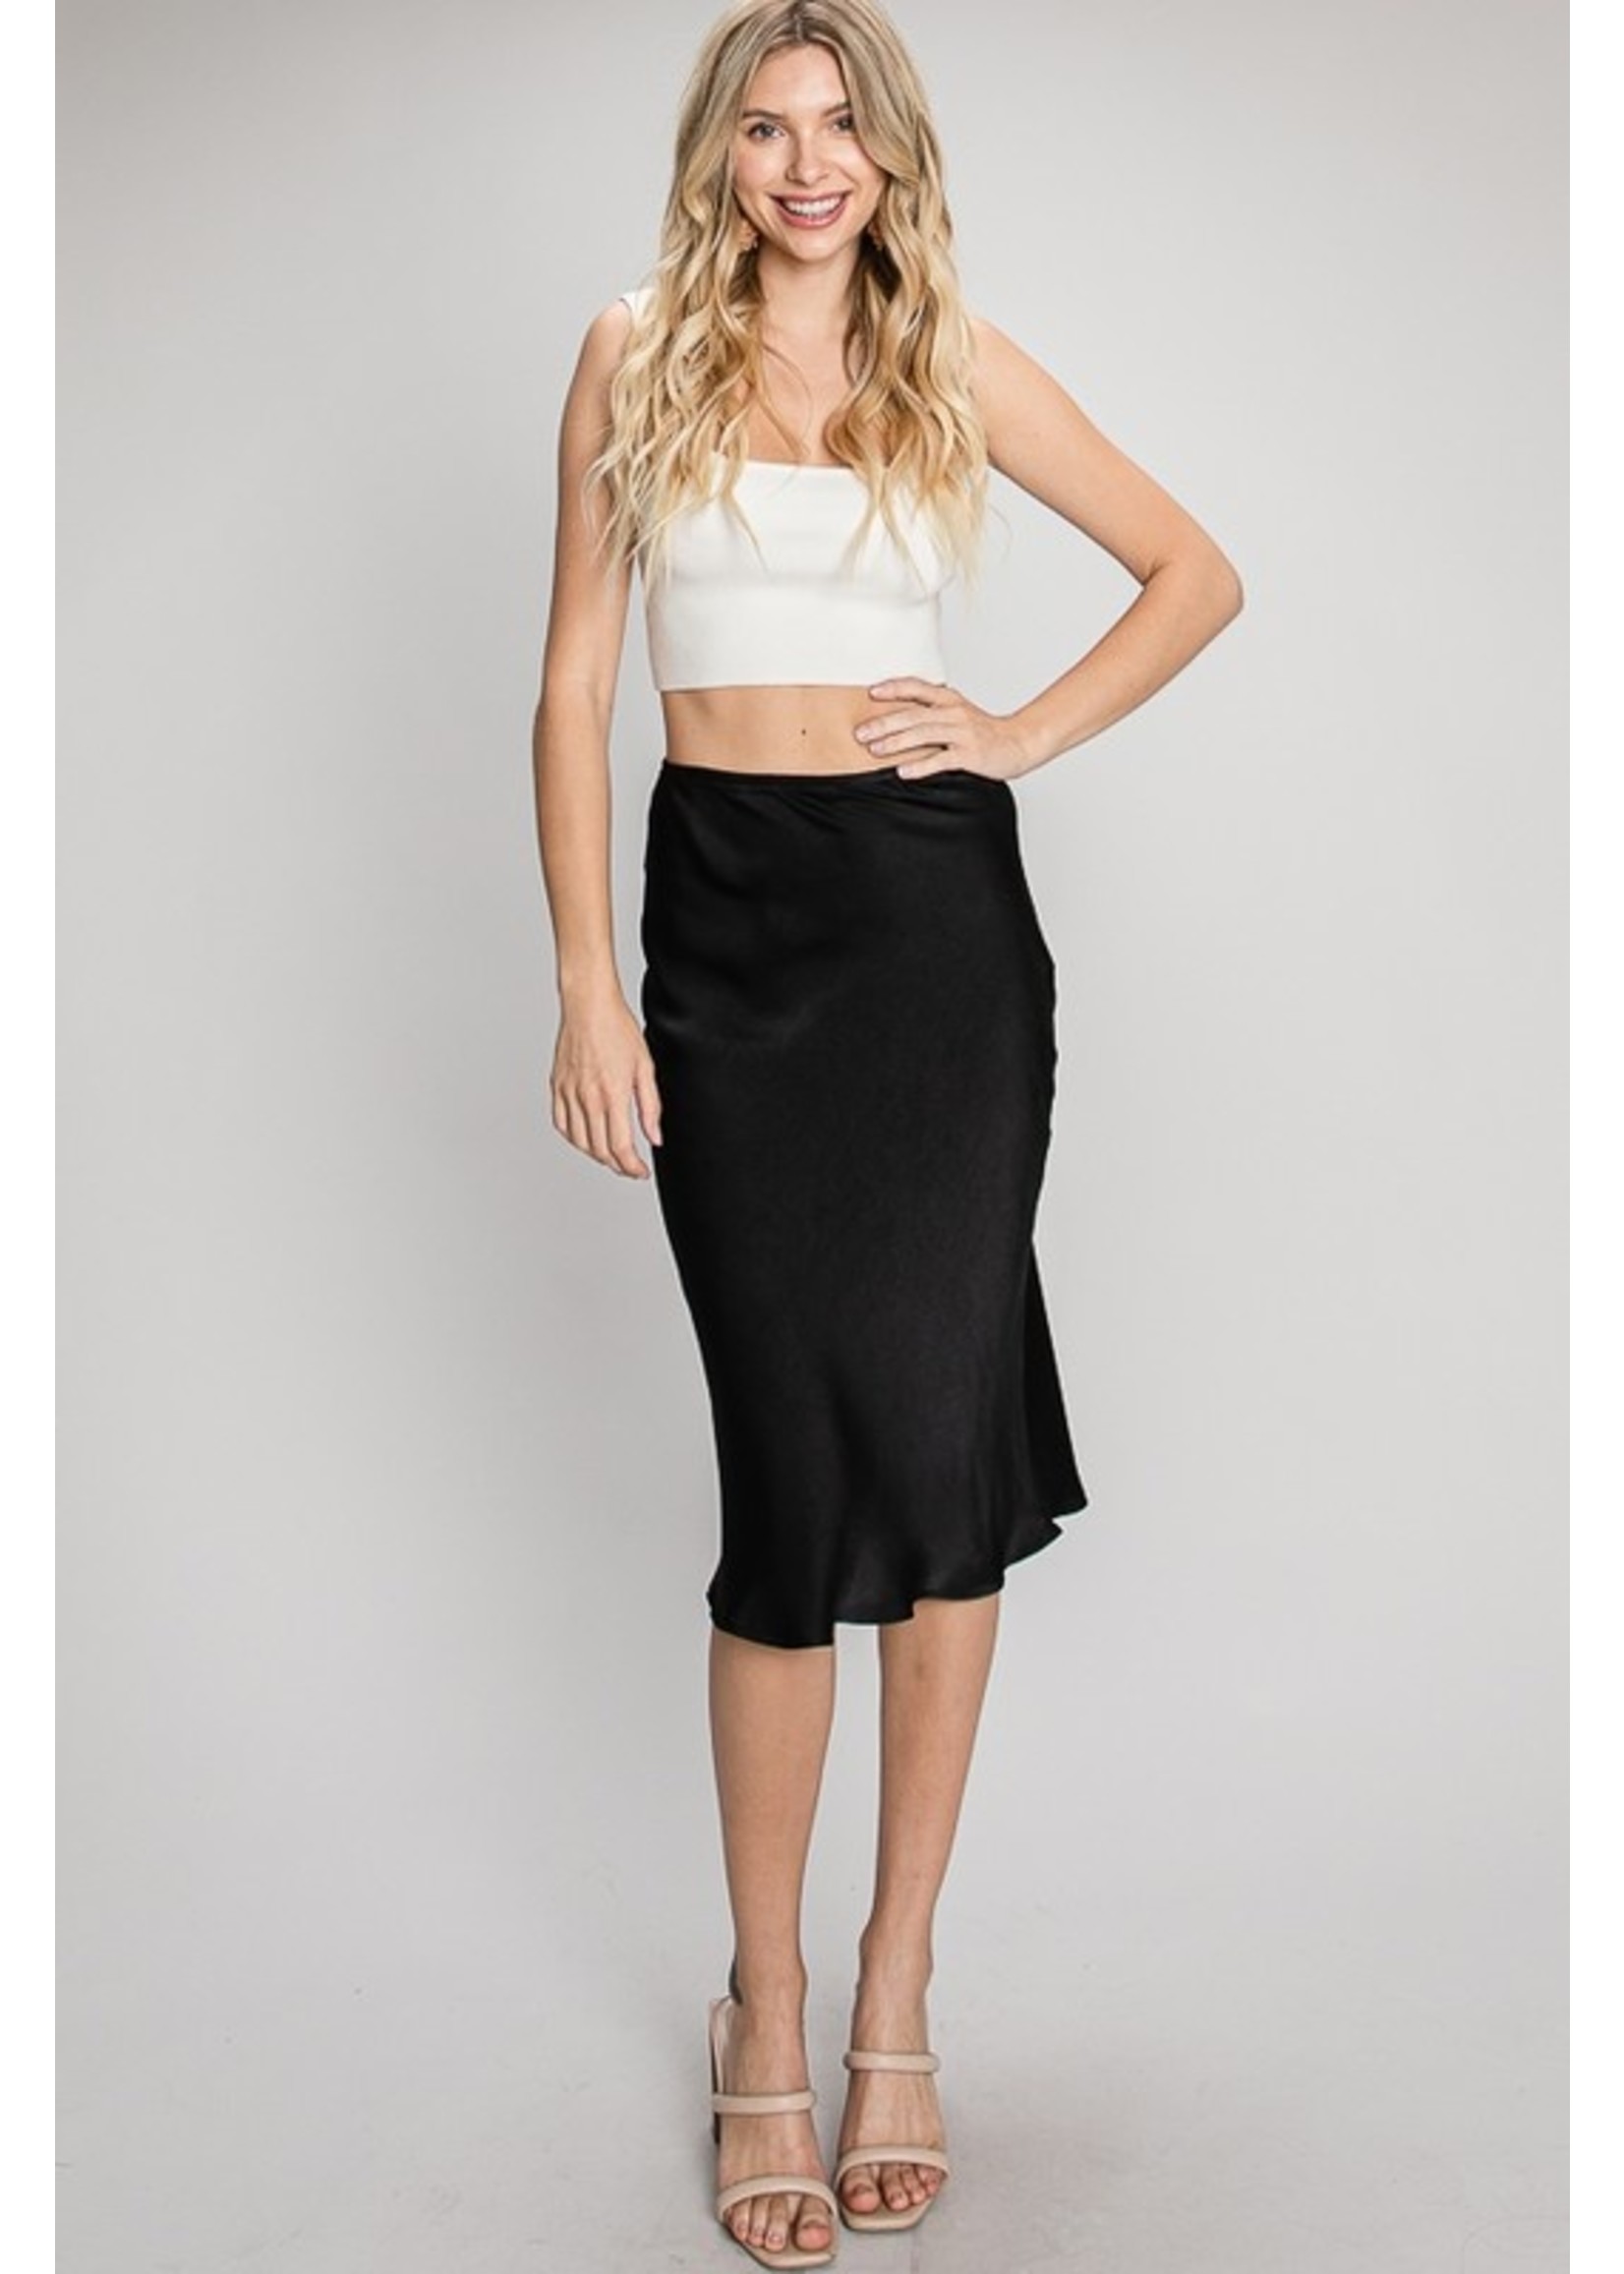 The Alana Satin Midi Skirt